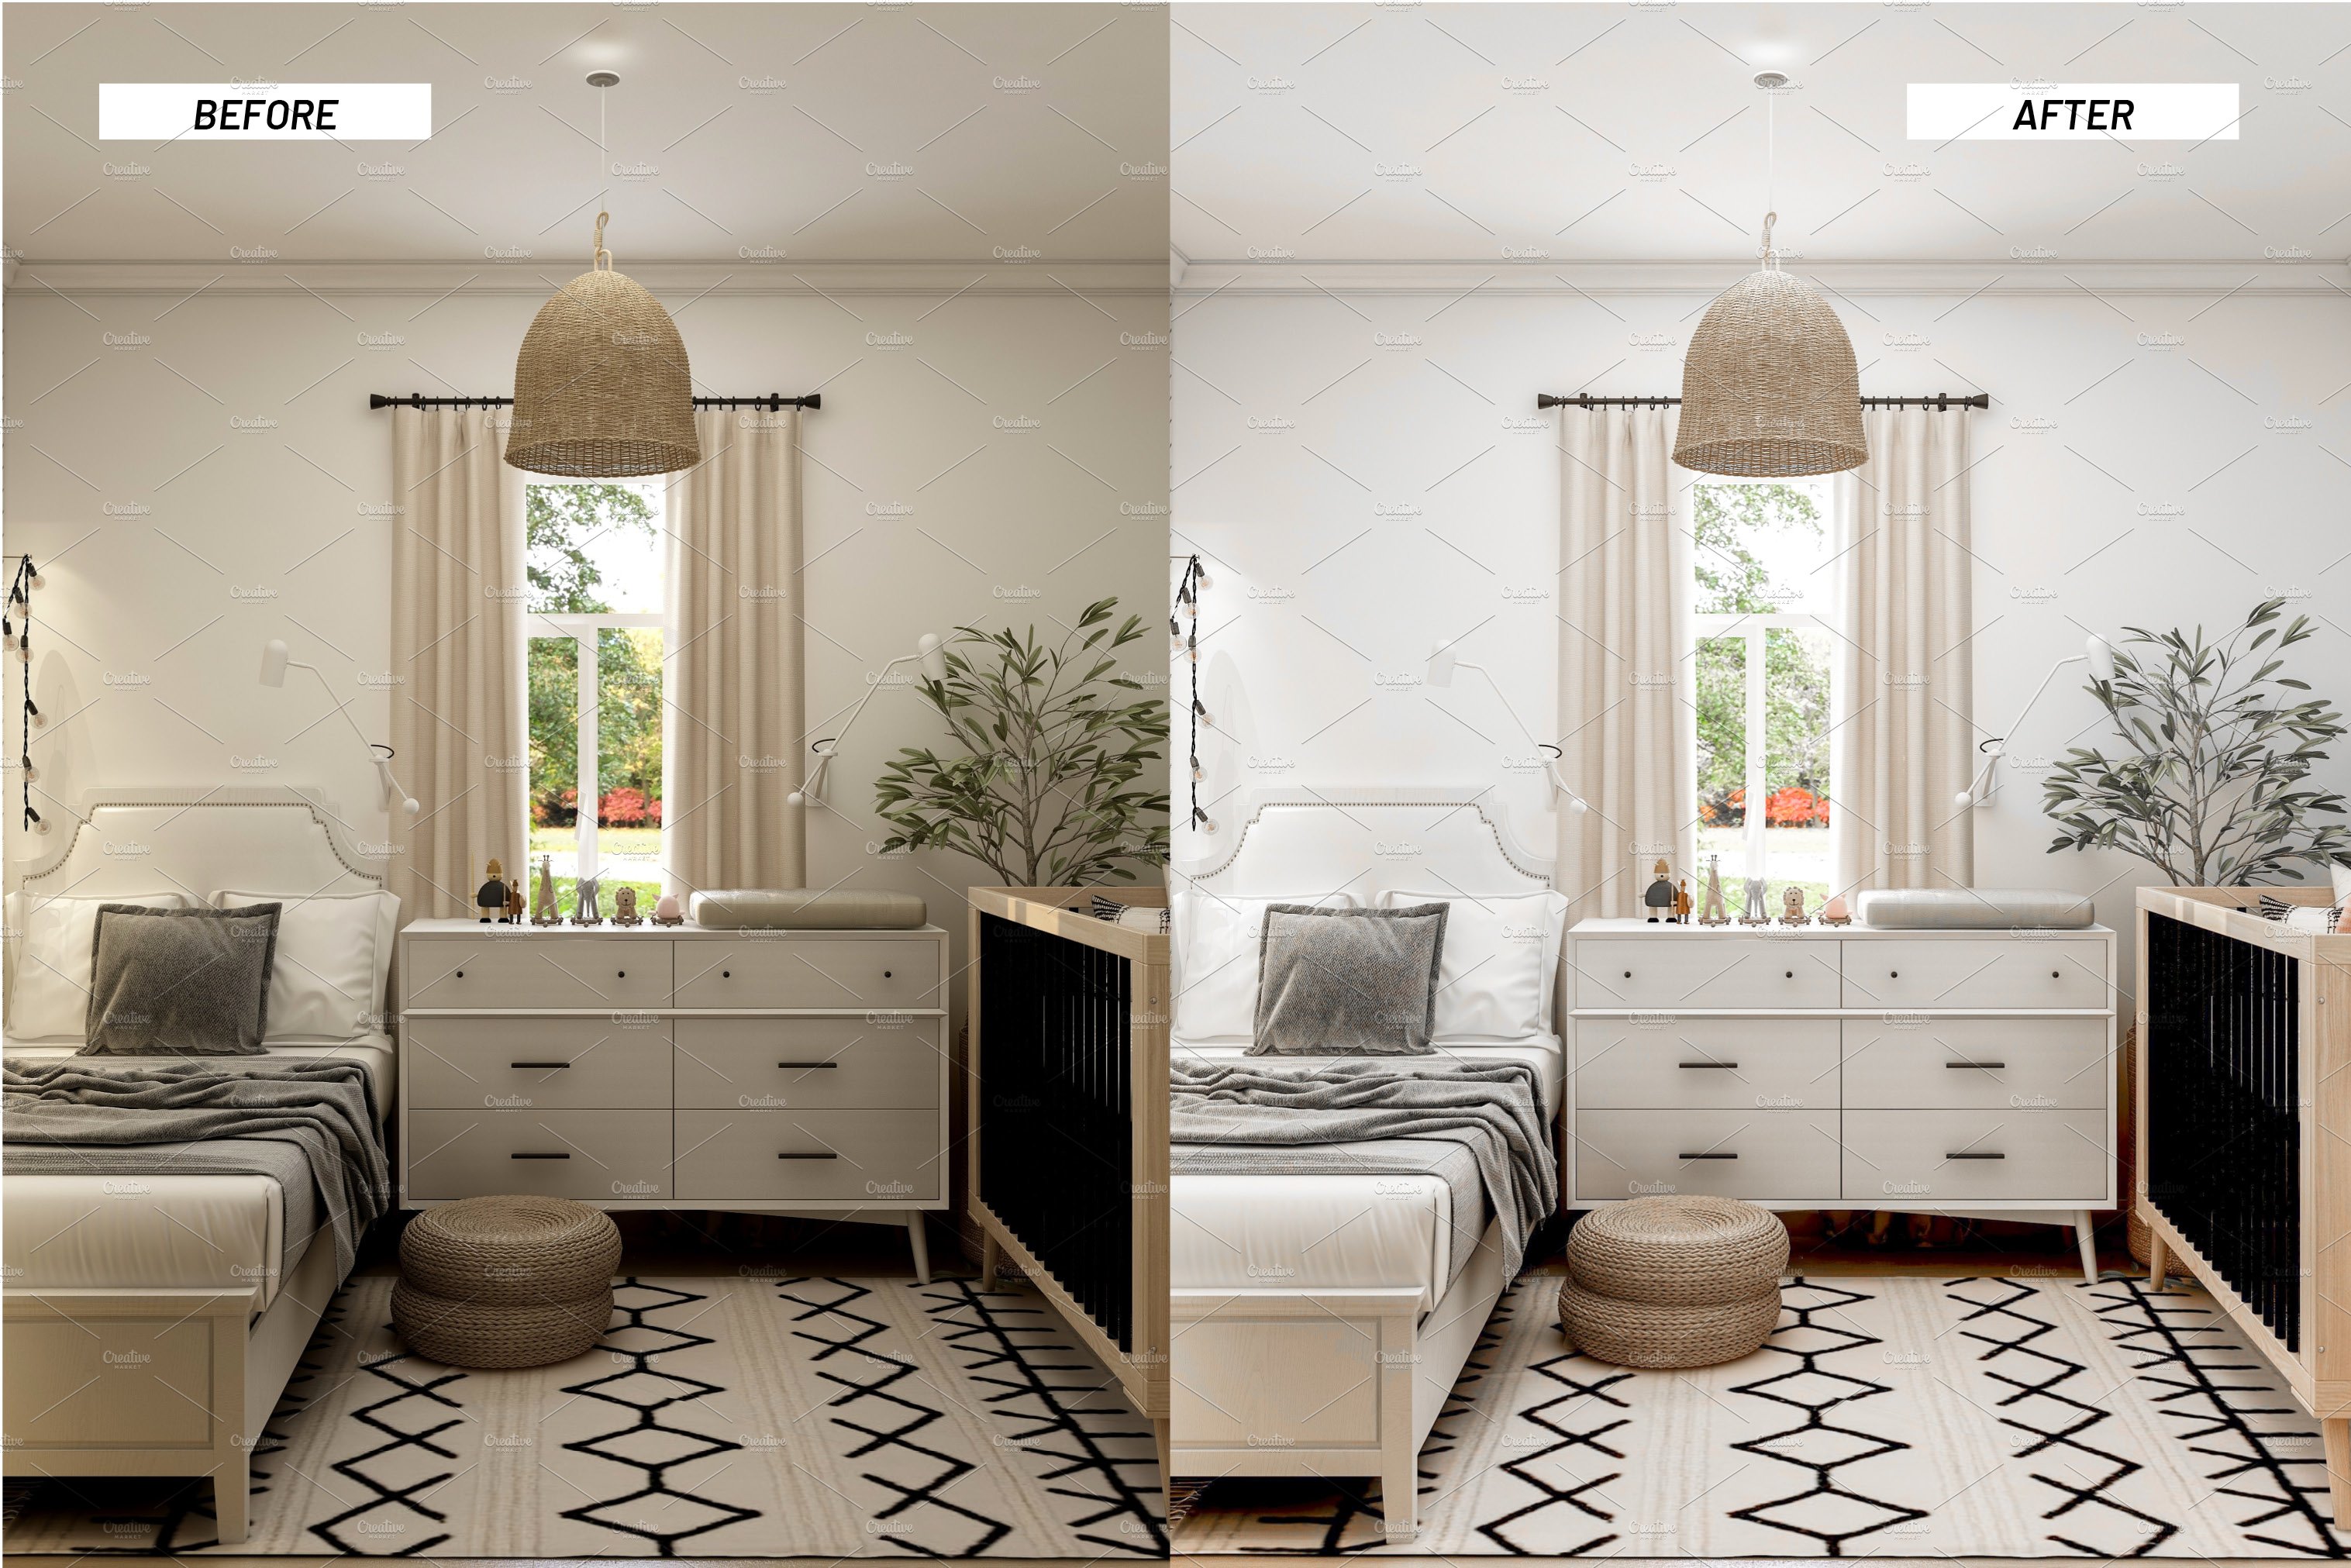 lightroom presets download free clean interior home 14 582